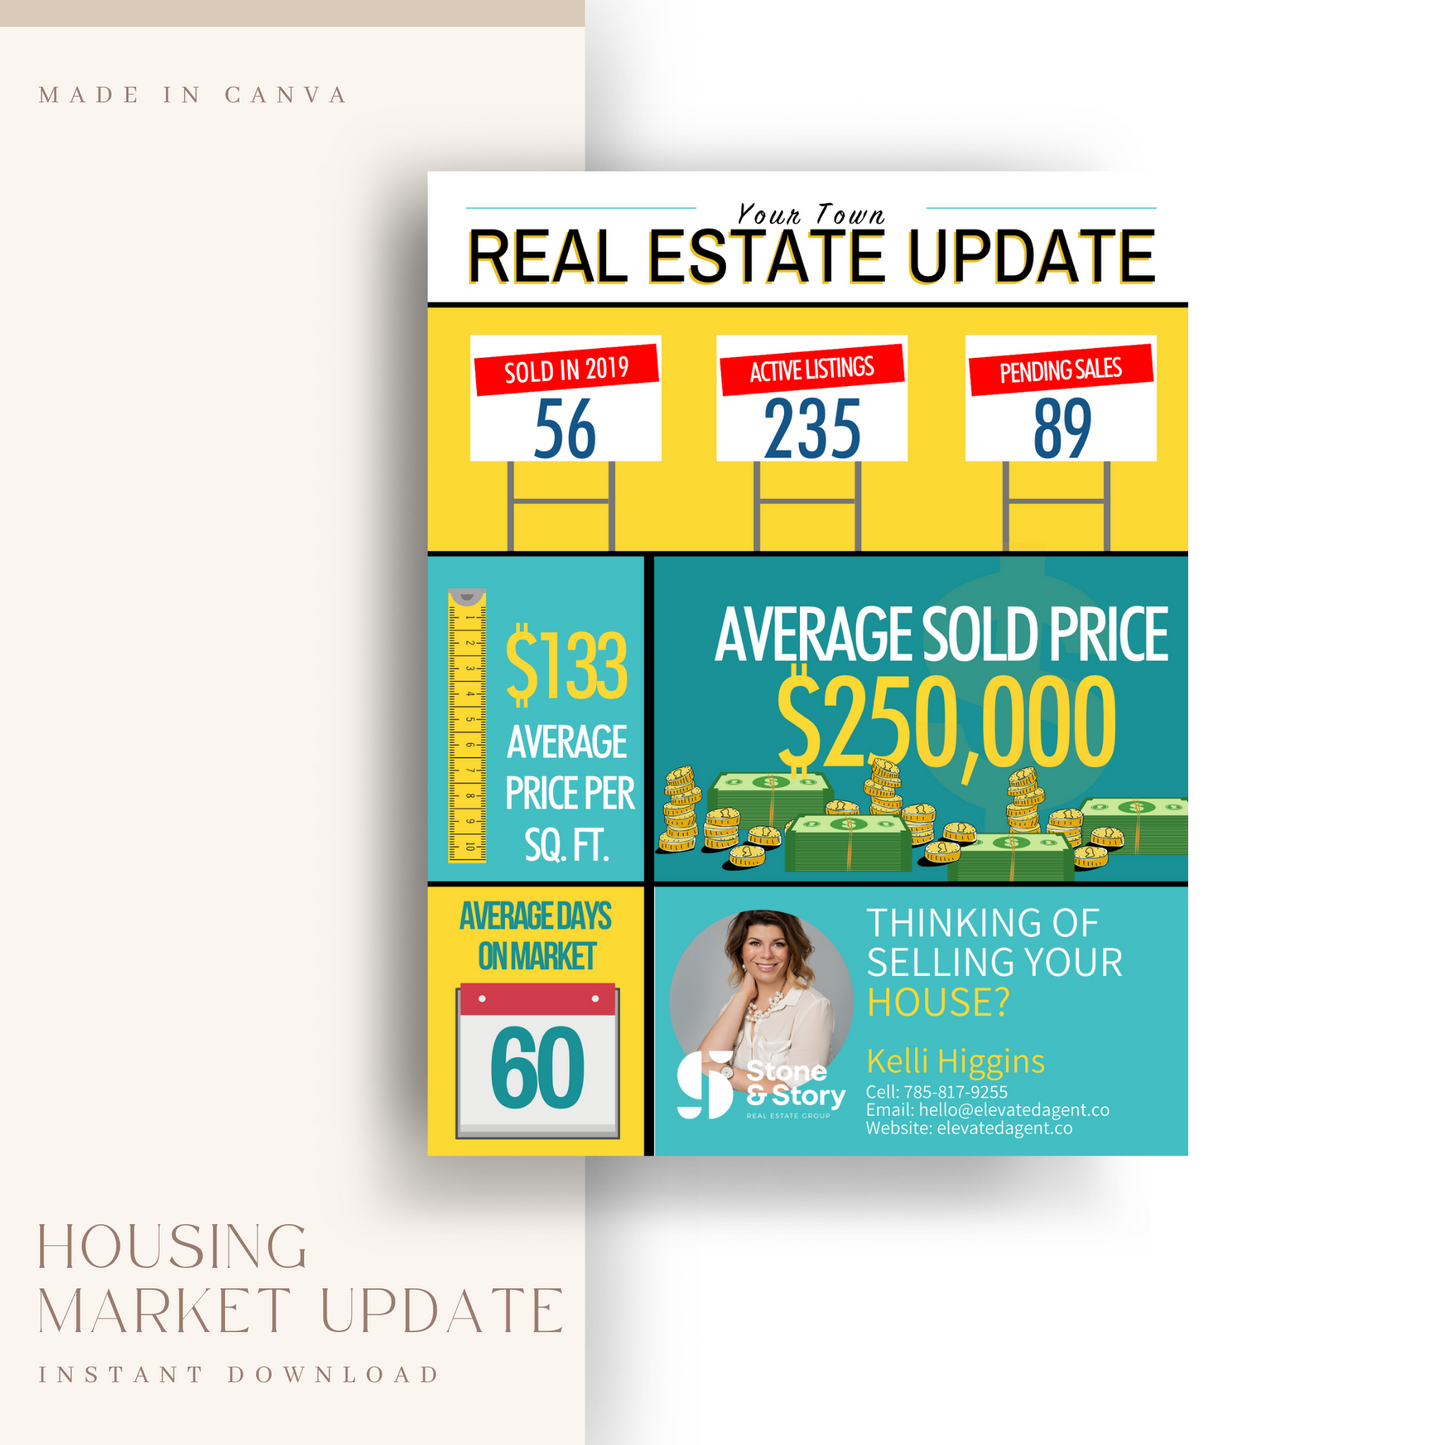 Housing Market Update Flyer